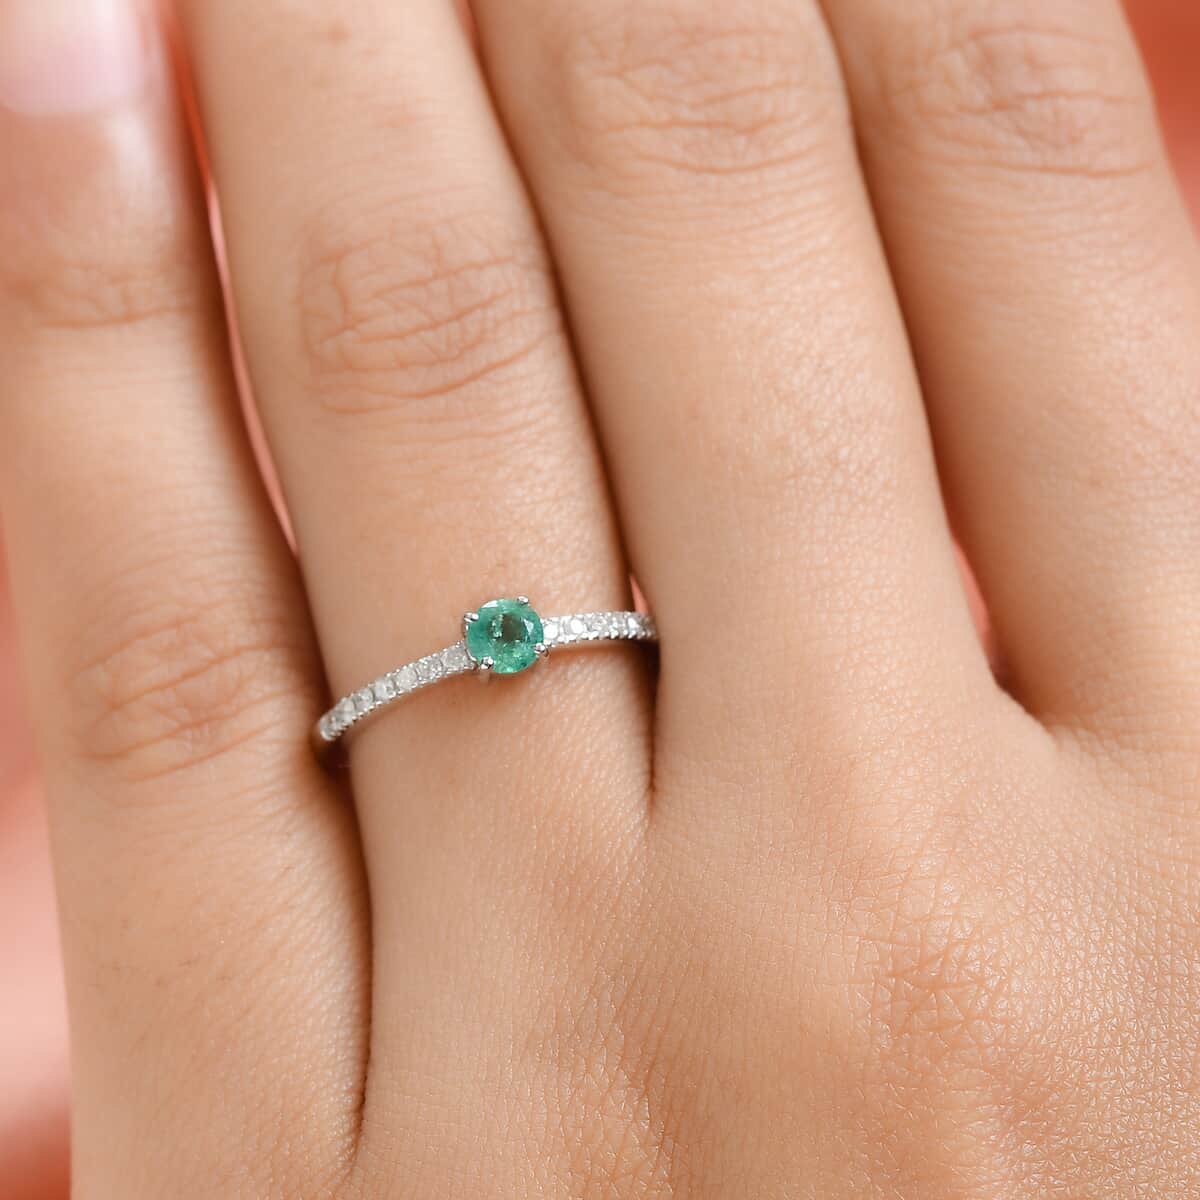 LUXORO 10K White Gold Premium Boyaca Colombian Emerald and Diamond Dainty Ring (Size 9.0) 0.35 ctw image number 2